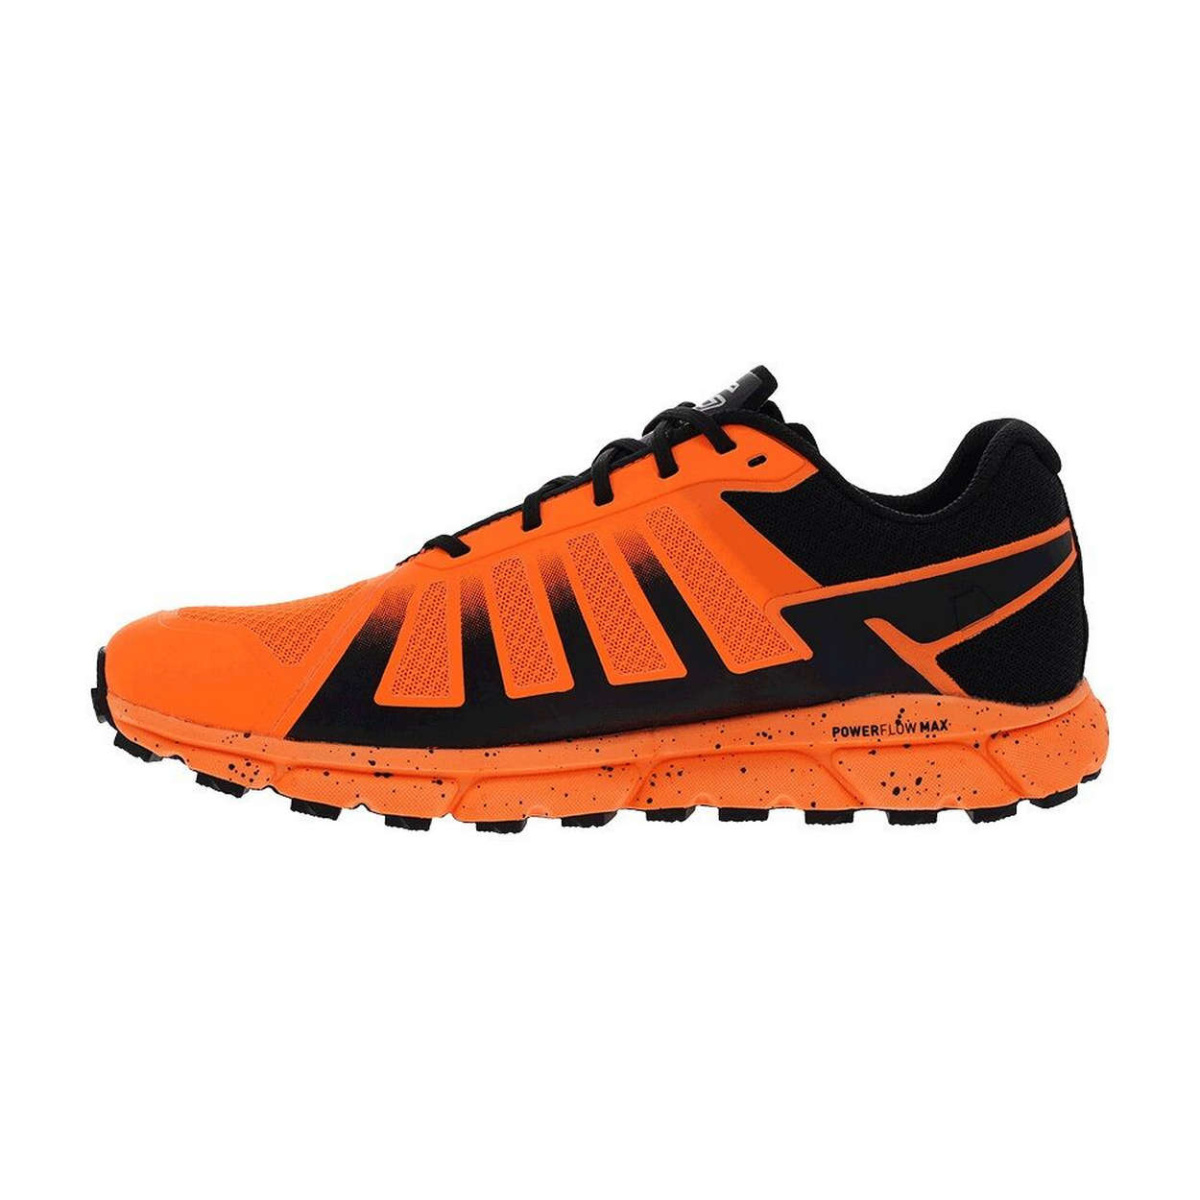 inov 8 Terra Ultra G 270 Orange zero drop trail running shoe Fast and Light CH 003